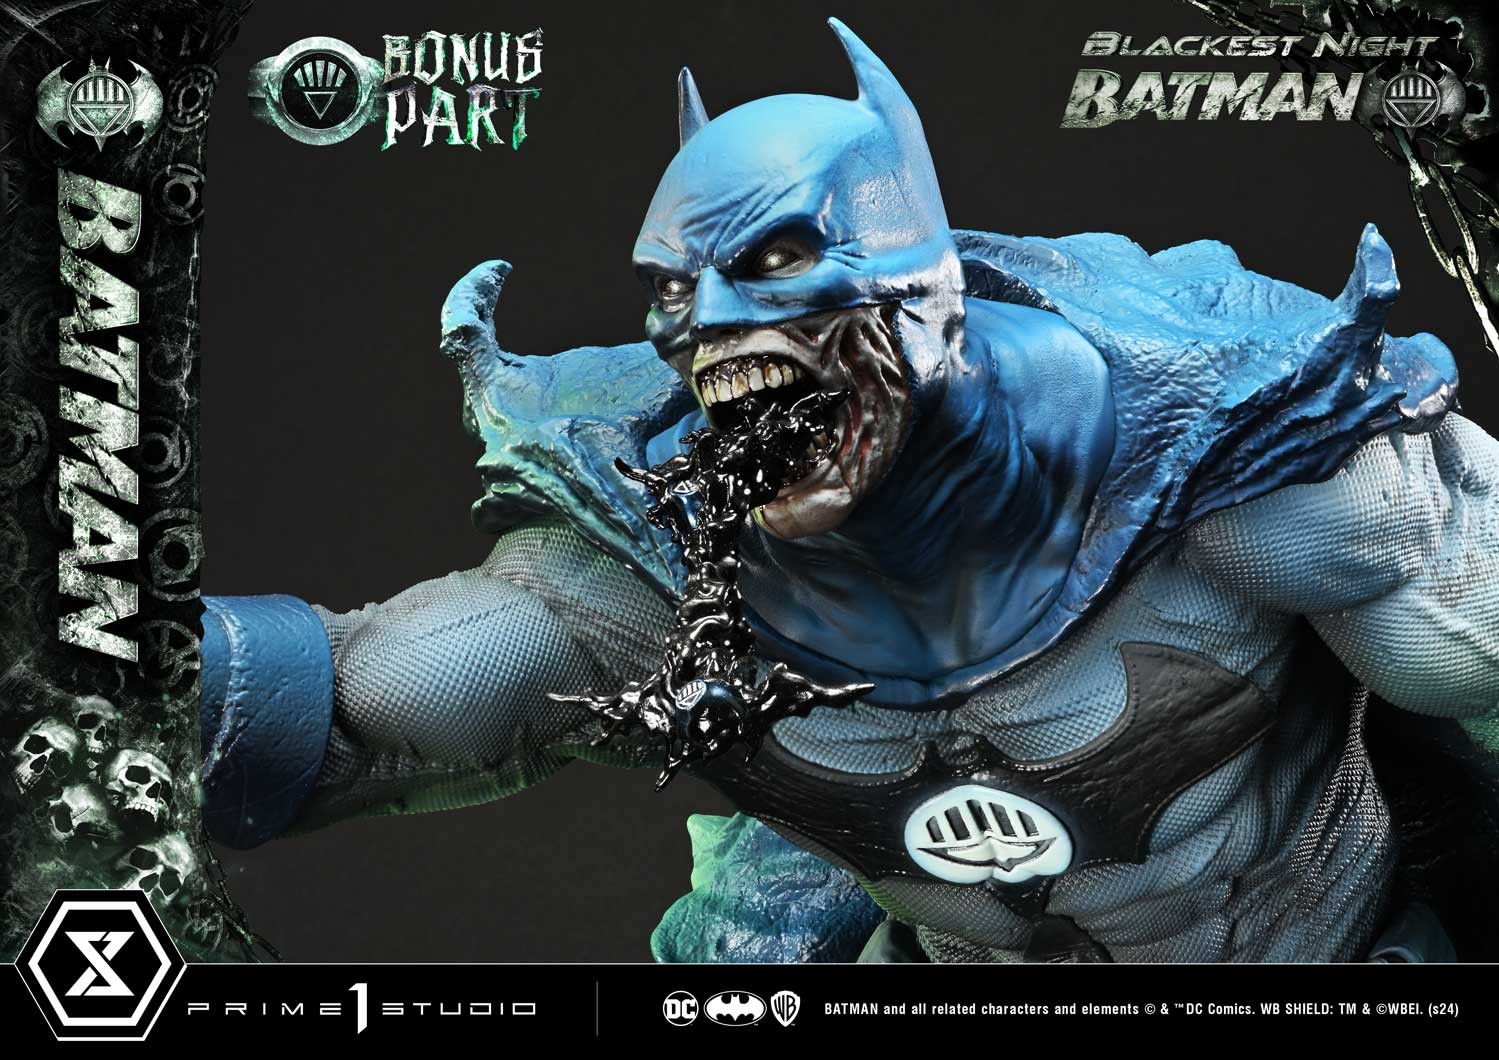 Batman Bonus Version (Prototype Shown) View 29